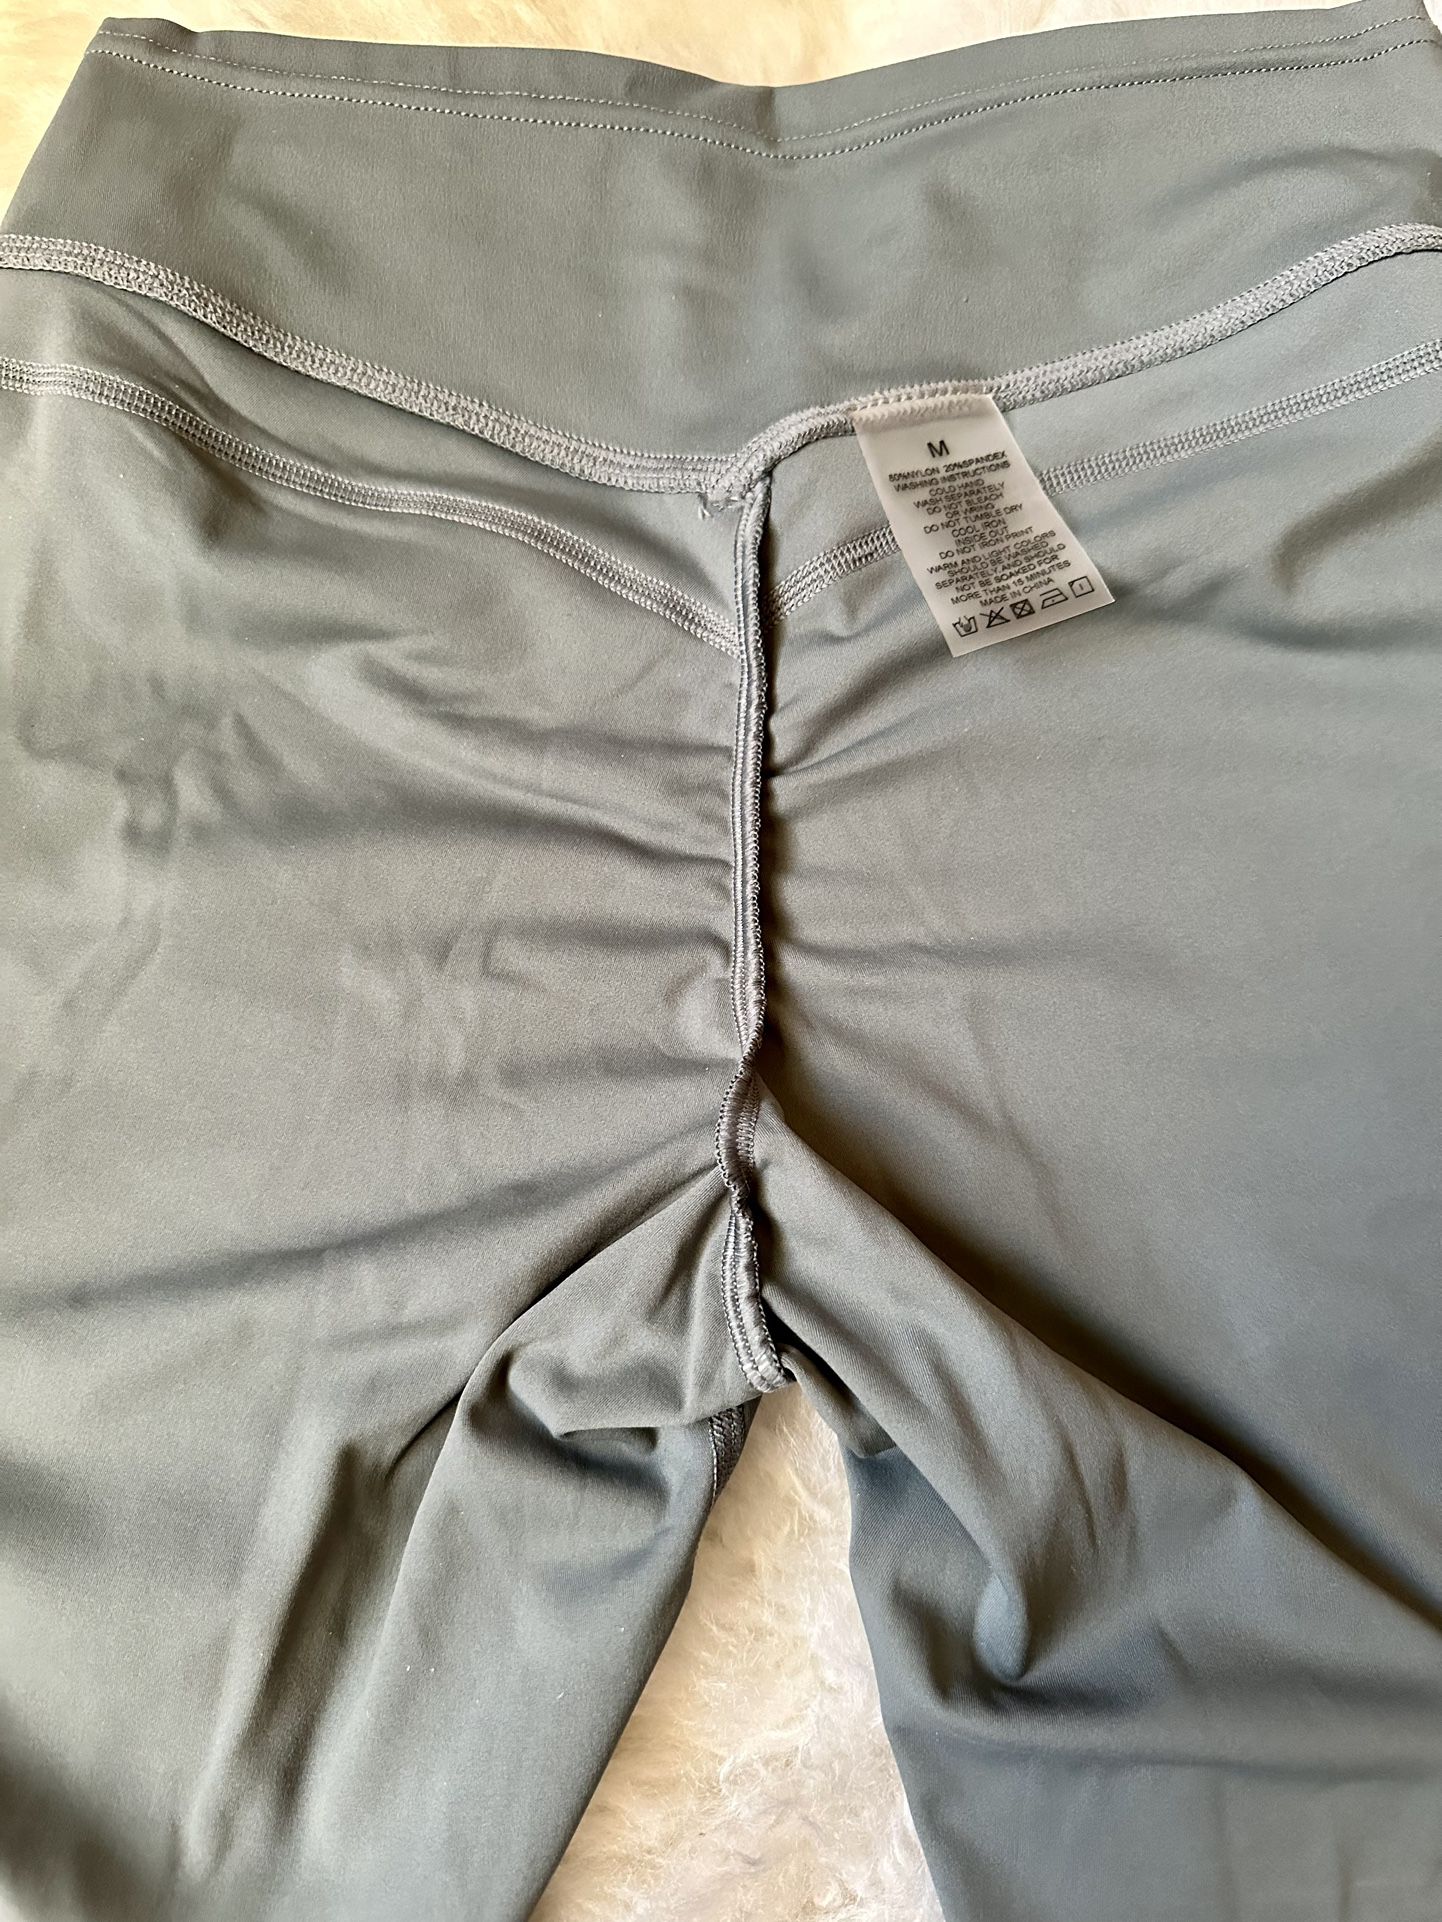 TomTiger Woman’s Scrunch Leggings — Size M for Sale in Boise, ID - OfferUp